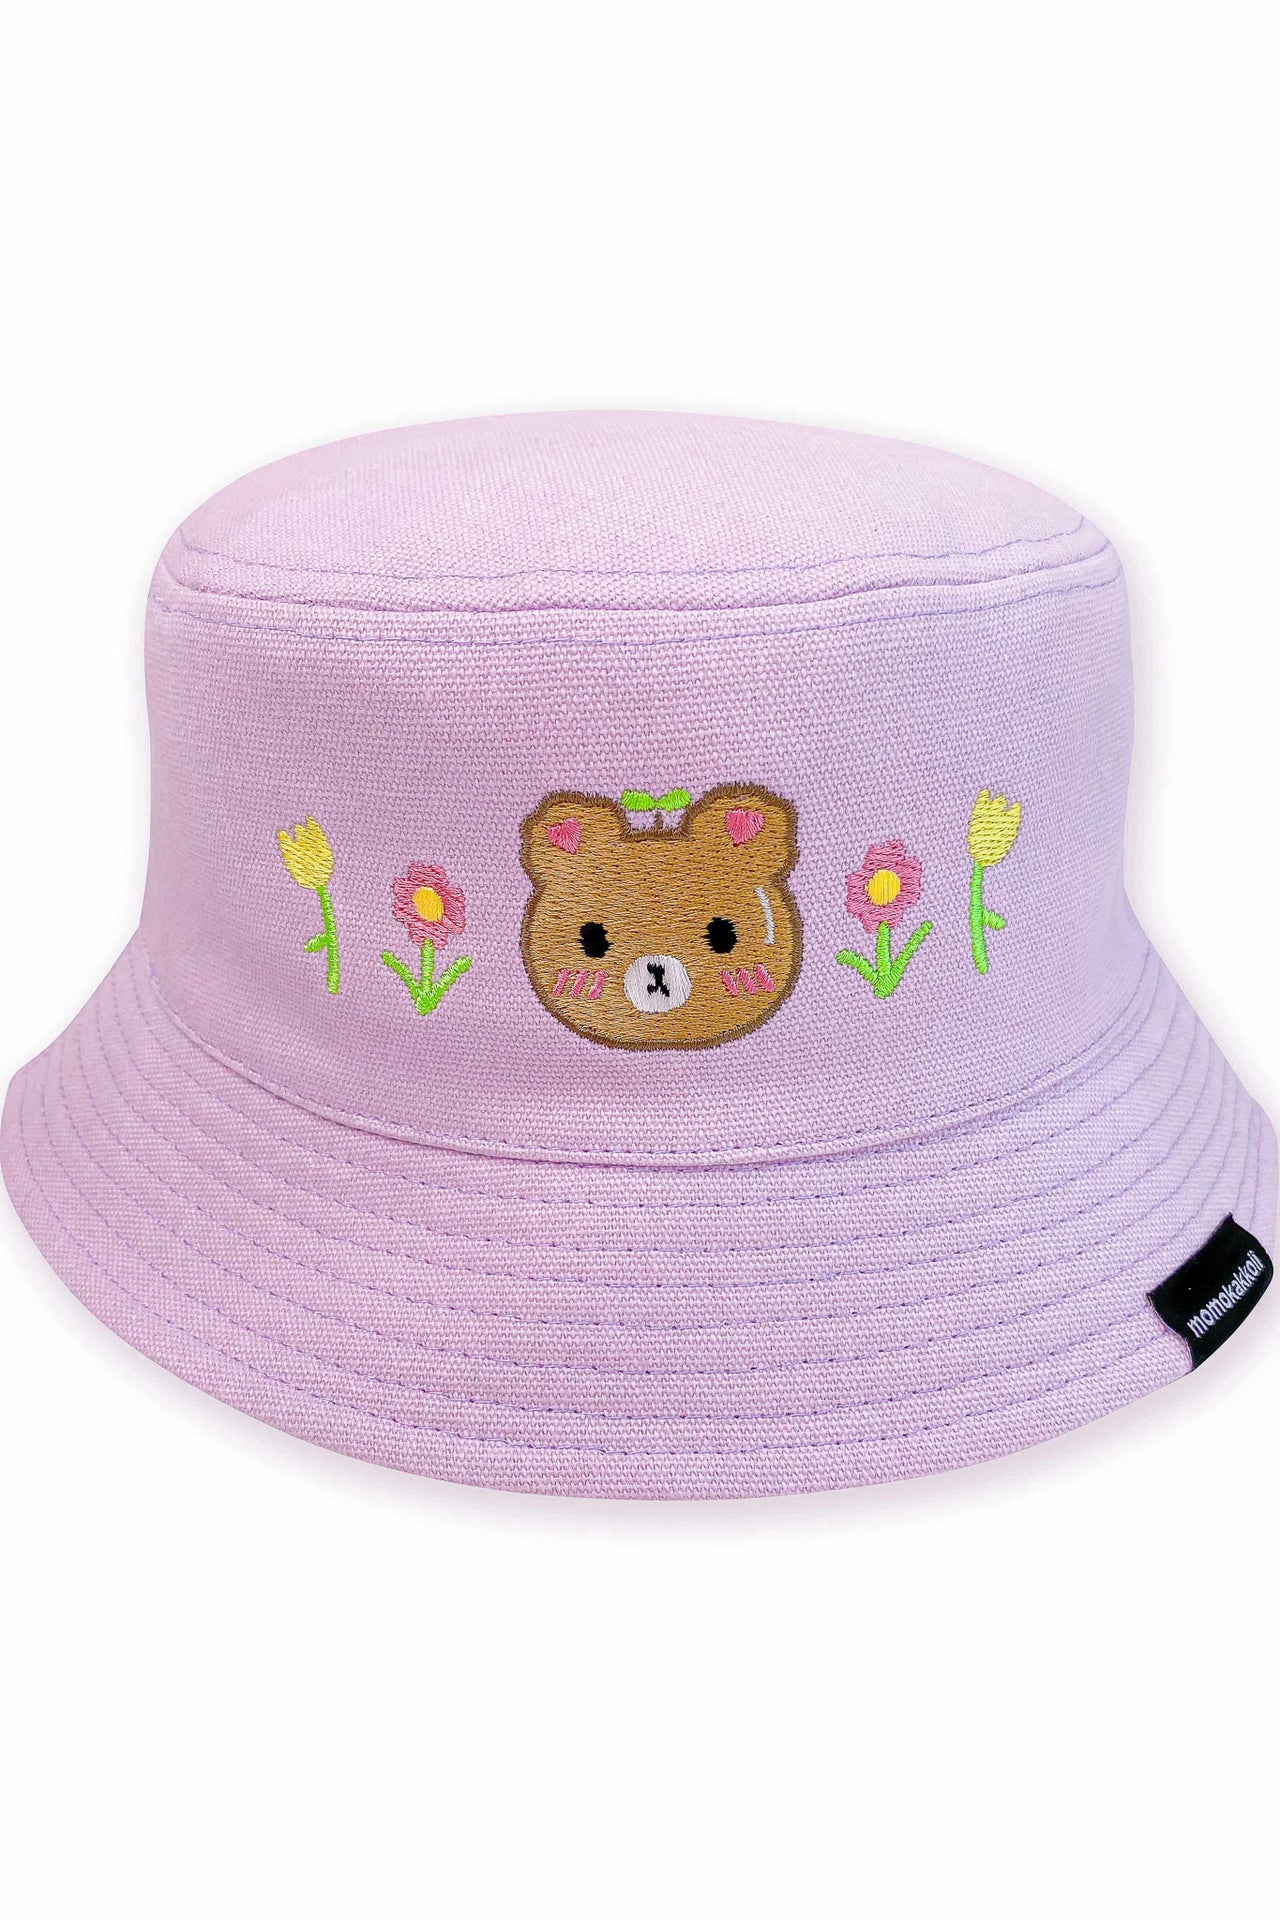 Bear & Flowers Embroidered Bucket Hat - Momokakkoii